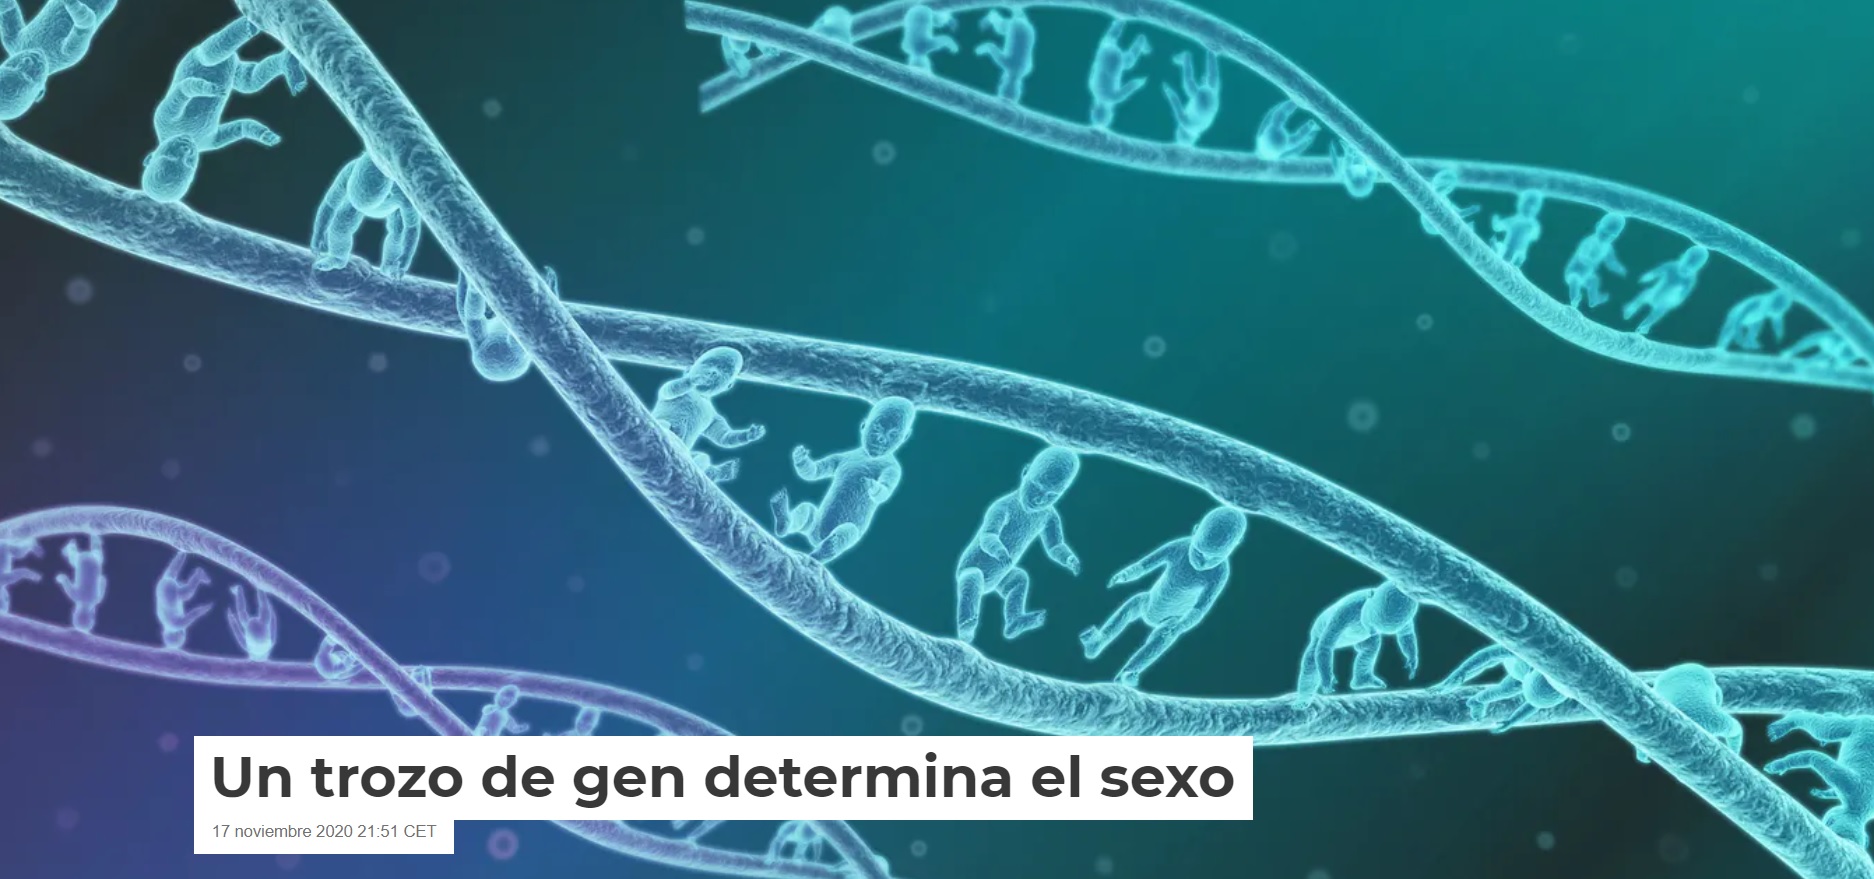 Un trozo de gen determina el sexo, por J